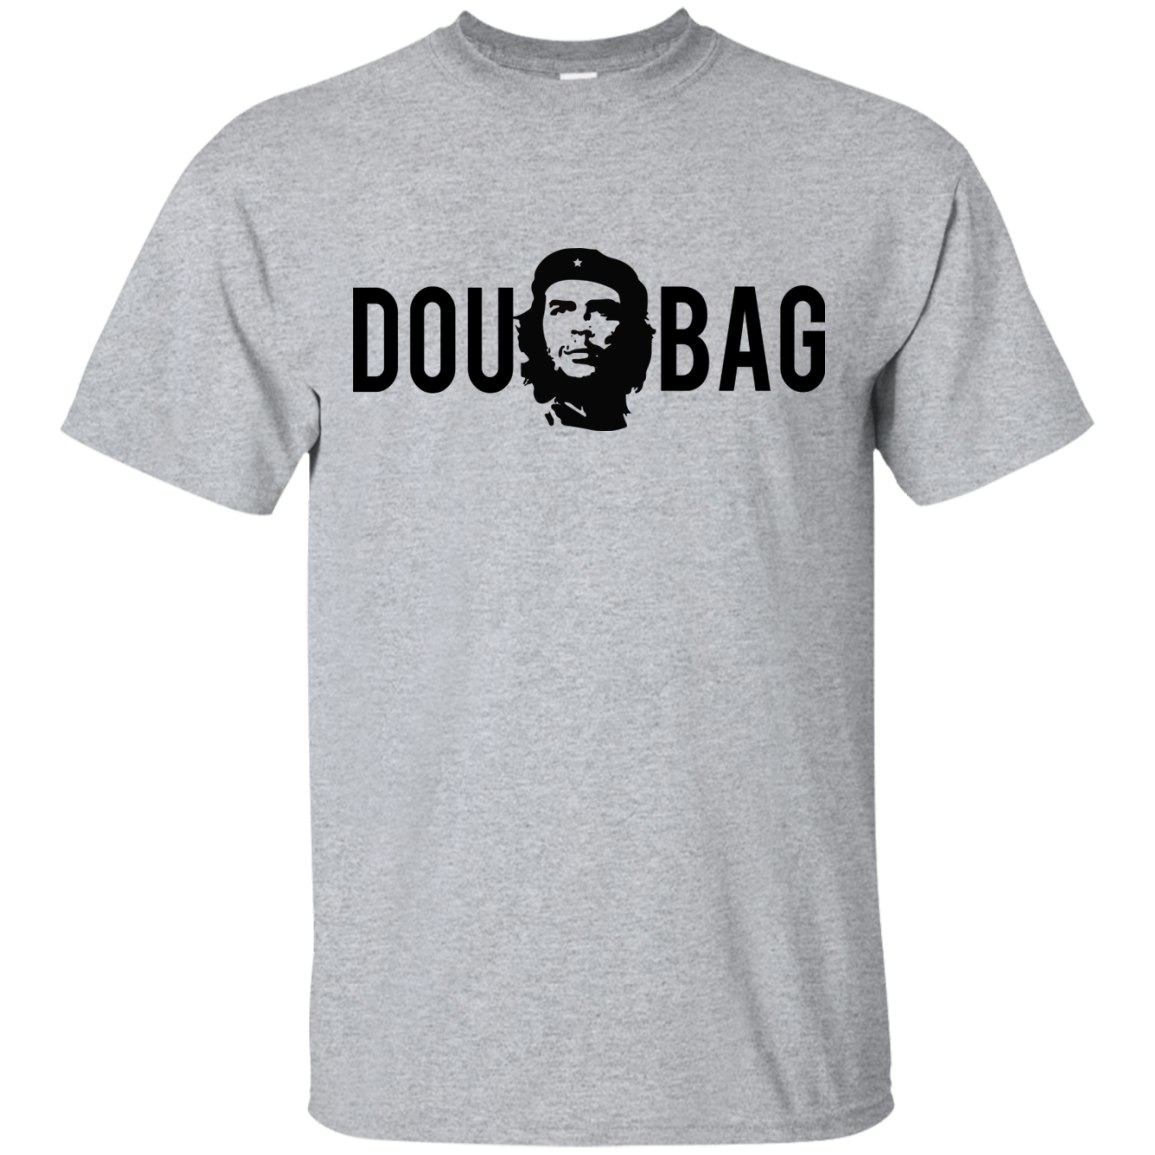 Douche Bag Neck T-Shirt PNG HD